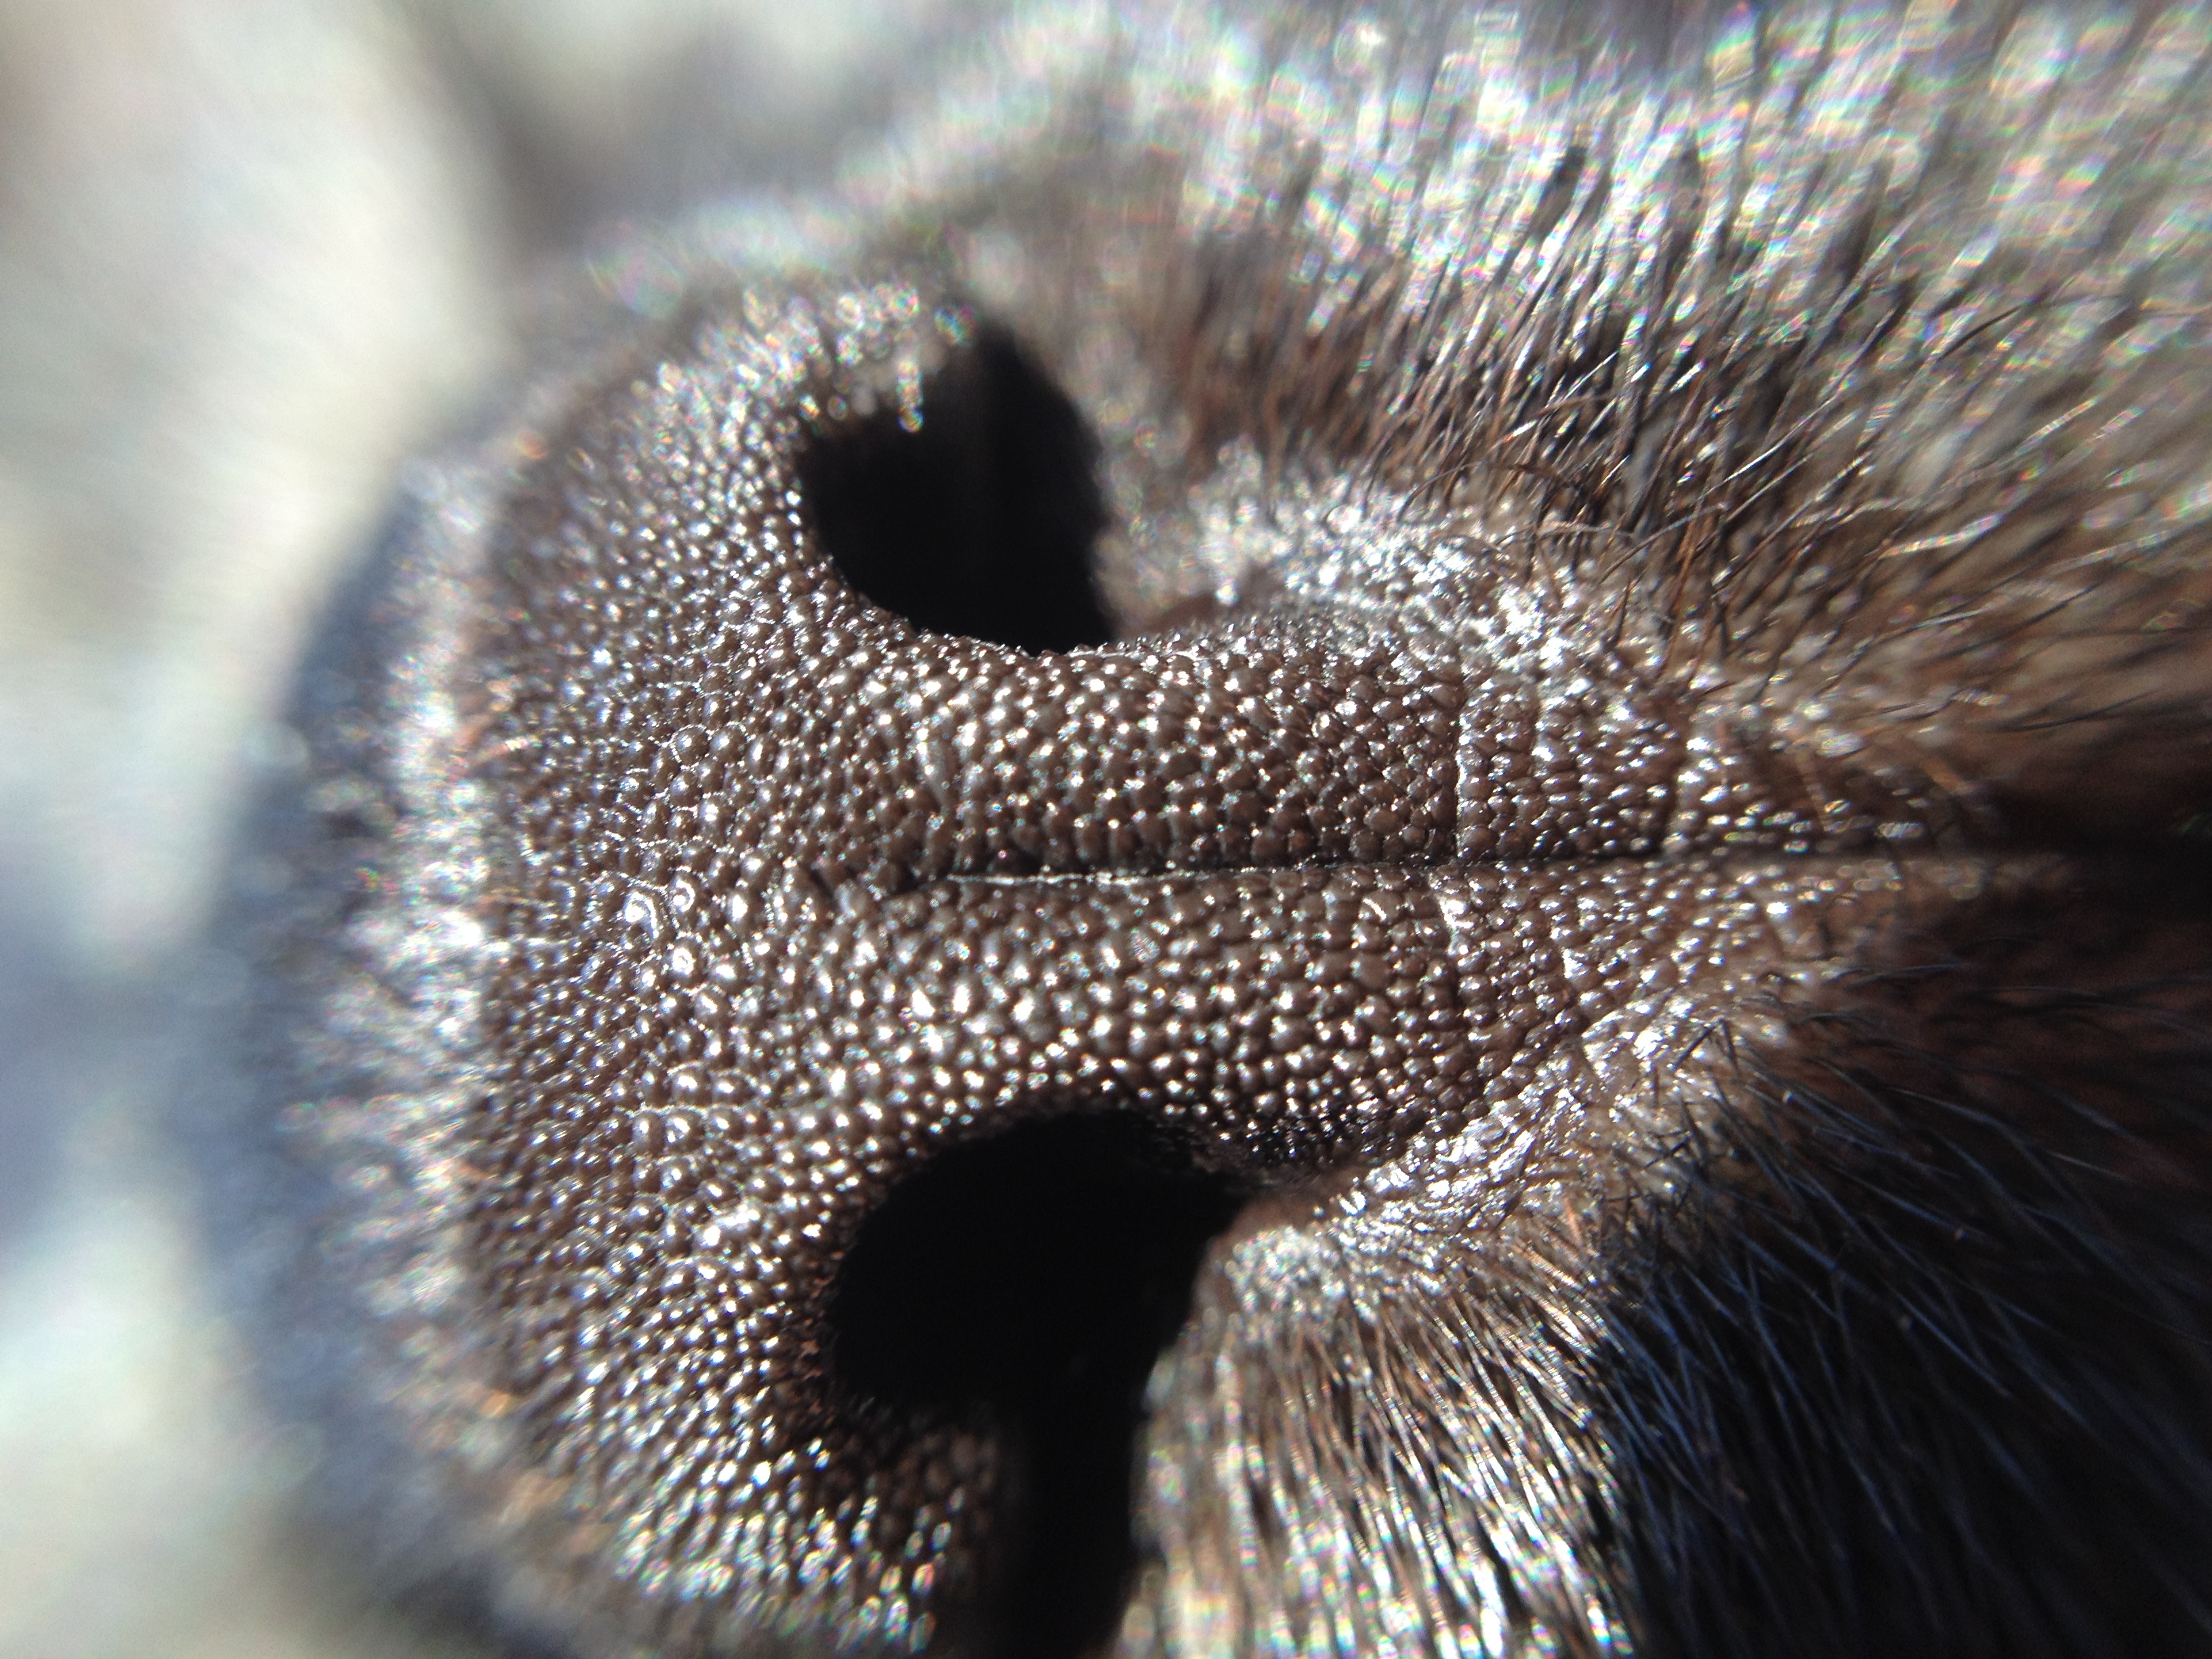 File:Cat nose.jpg - Wikimedia Commons